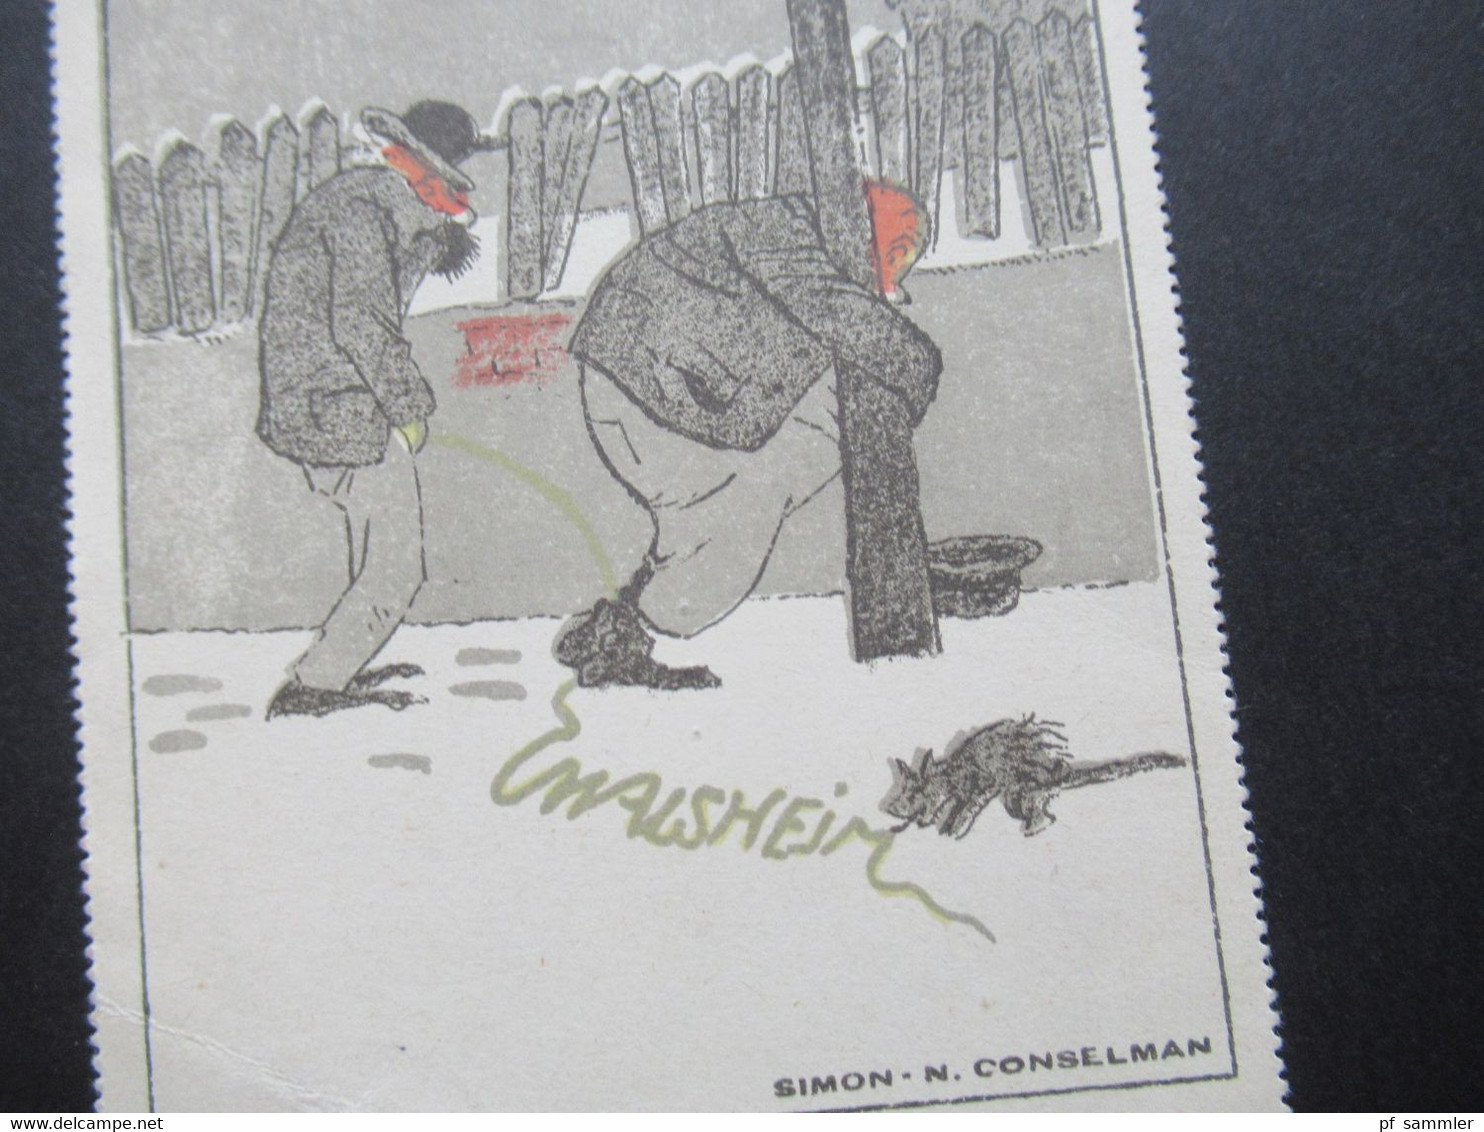 Luxemburg 1920er Jahre Künstlerkarte Karikatur / Spottkarte Souvenir Du Walsheim Simon N. Condelman Editeur Aug. Nimax - 1921-27 Charlotte Di Fronte